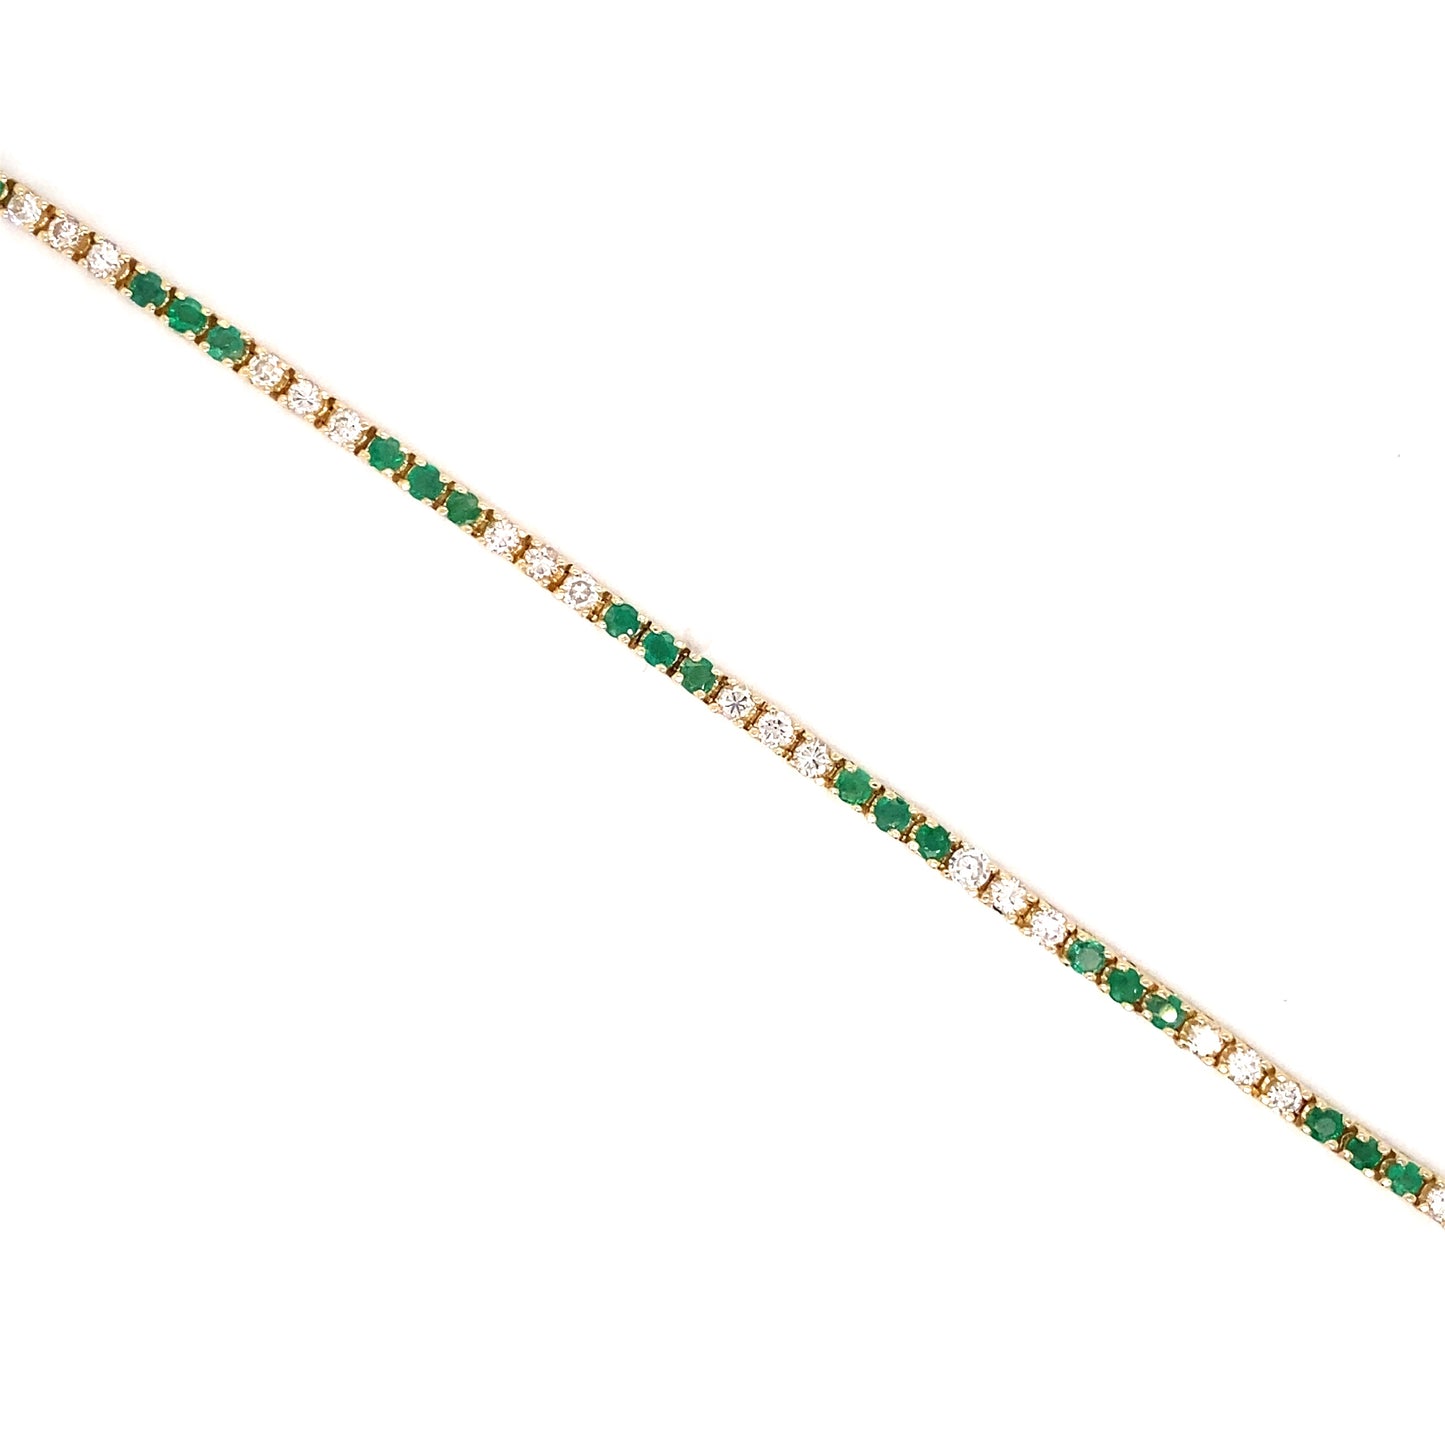 Circa 1980s Alternating Emerald and Diamond Tennis Bracelet in 14K Gold